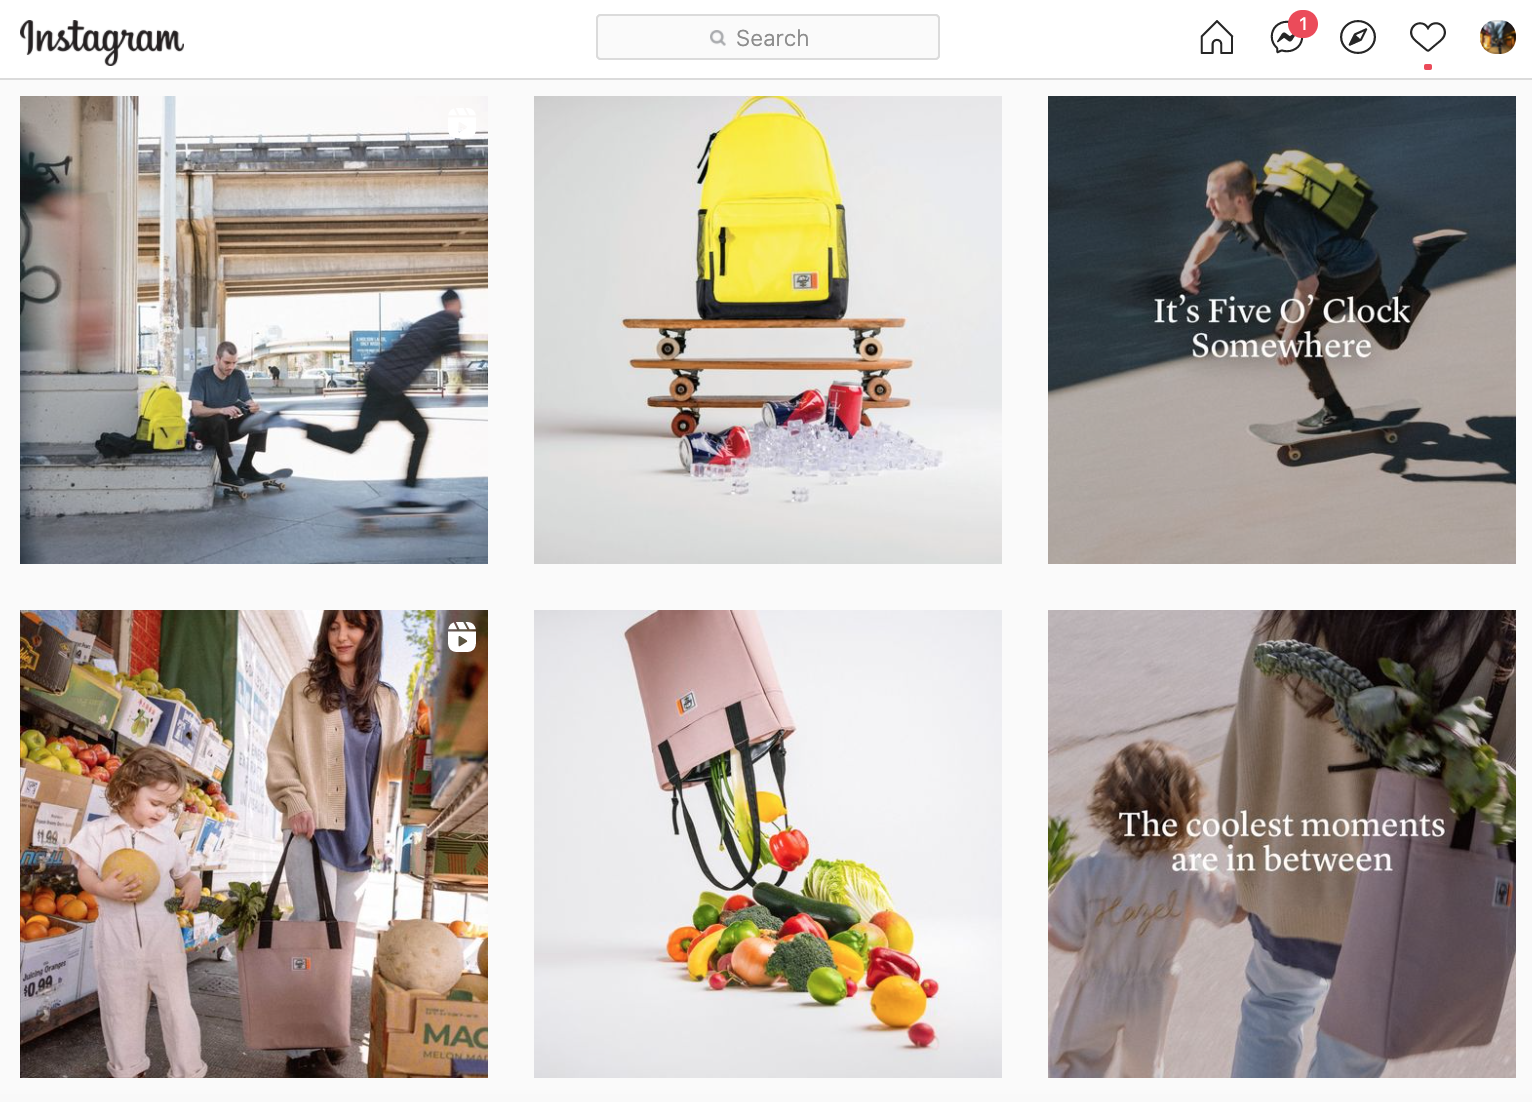 Instagram as social commerce platform